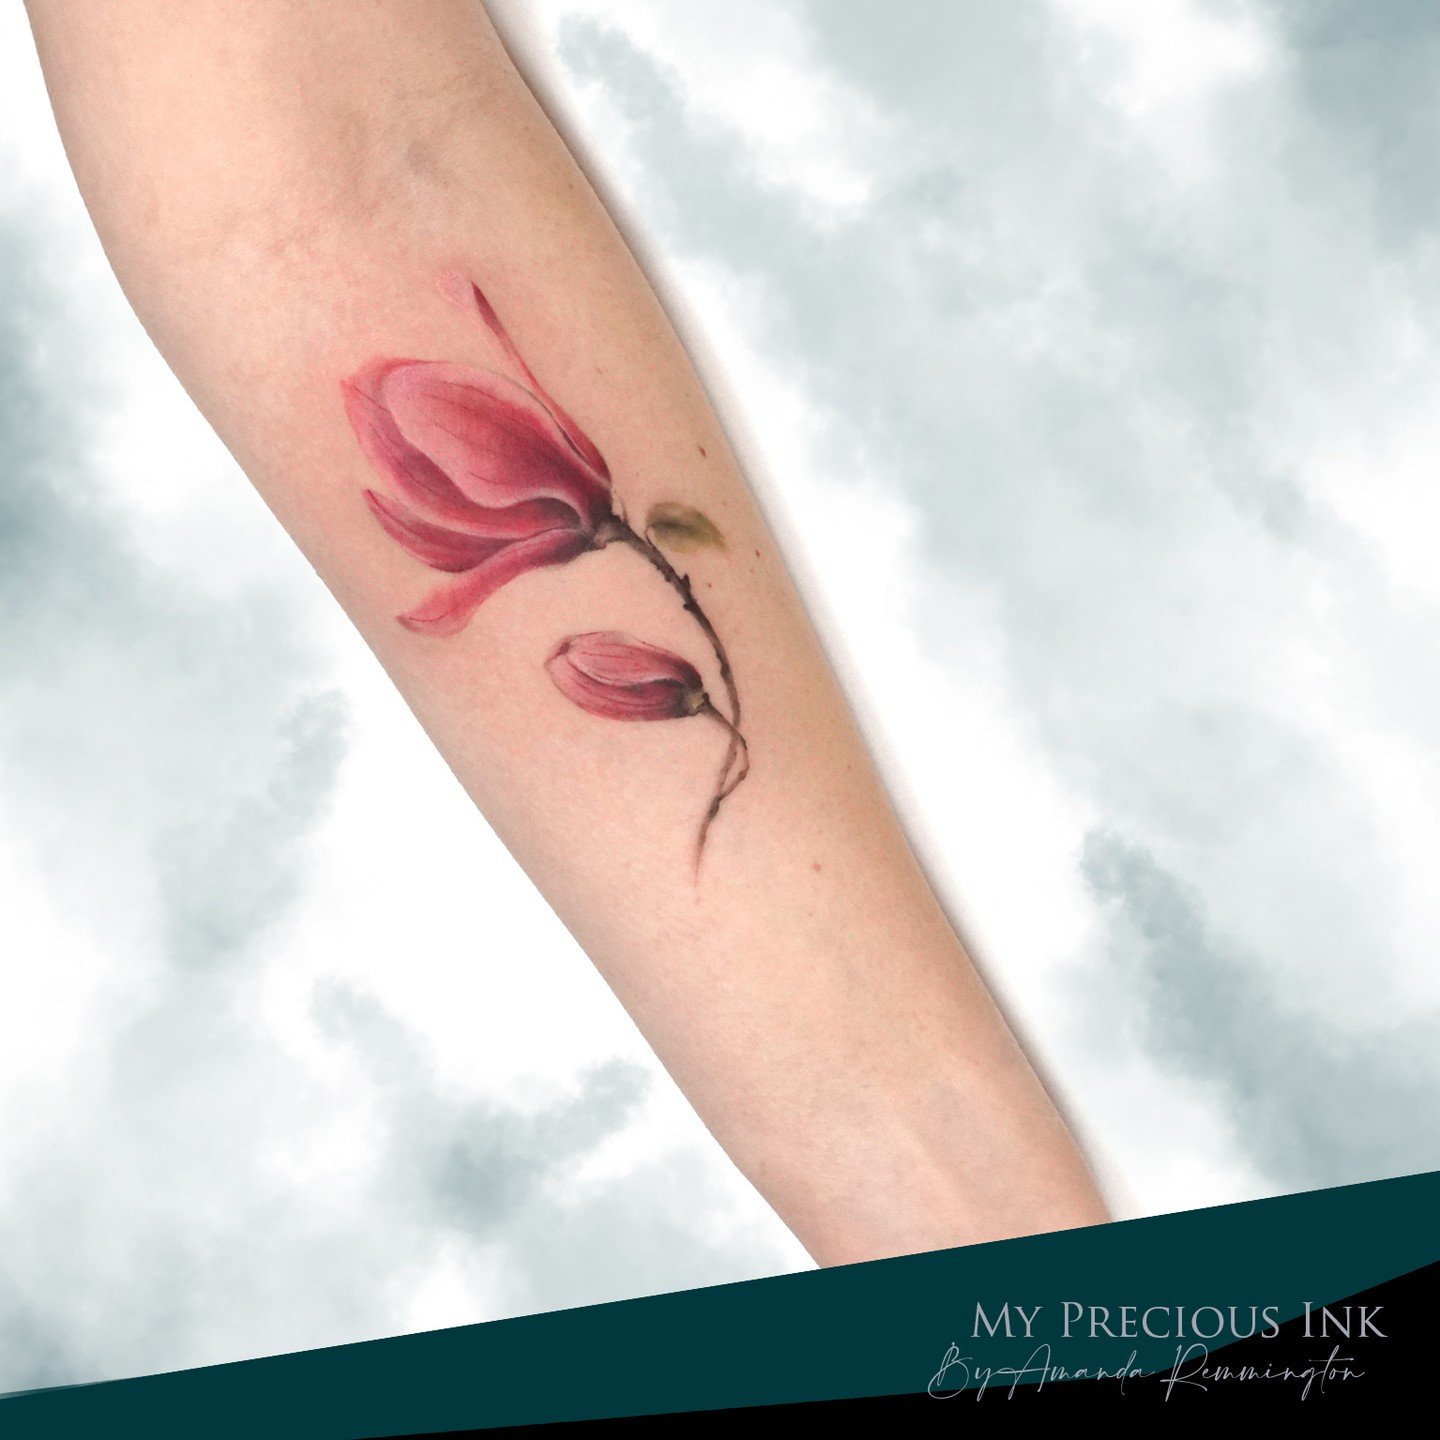 pretty magnolia ///&mdash;&mdash;&gt; www.mypreciousink.nl &lt;&mdash;&mdash;\\\ #Tattoo #watercolortattoo #watercolourtattoo #watercolor #thebesttattooartists #tattoodo 
 #tattooart #tattooflower #tattooidea #thebestbelgiumtattooartists #tattoolover